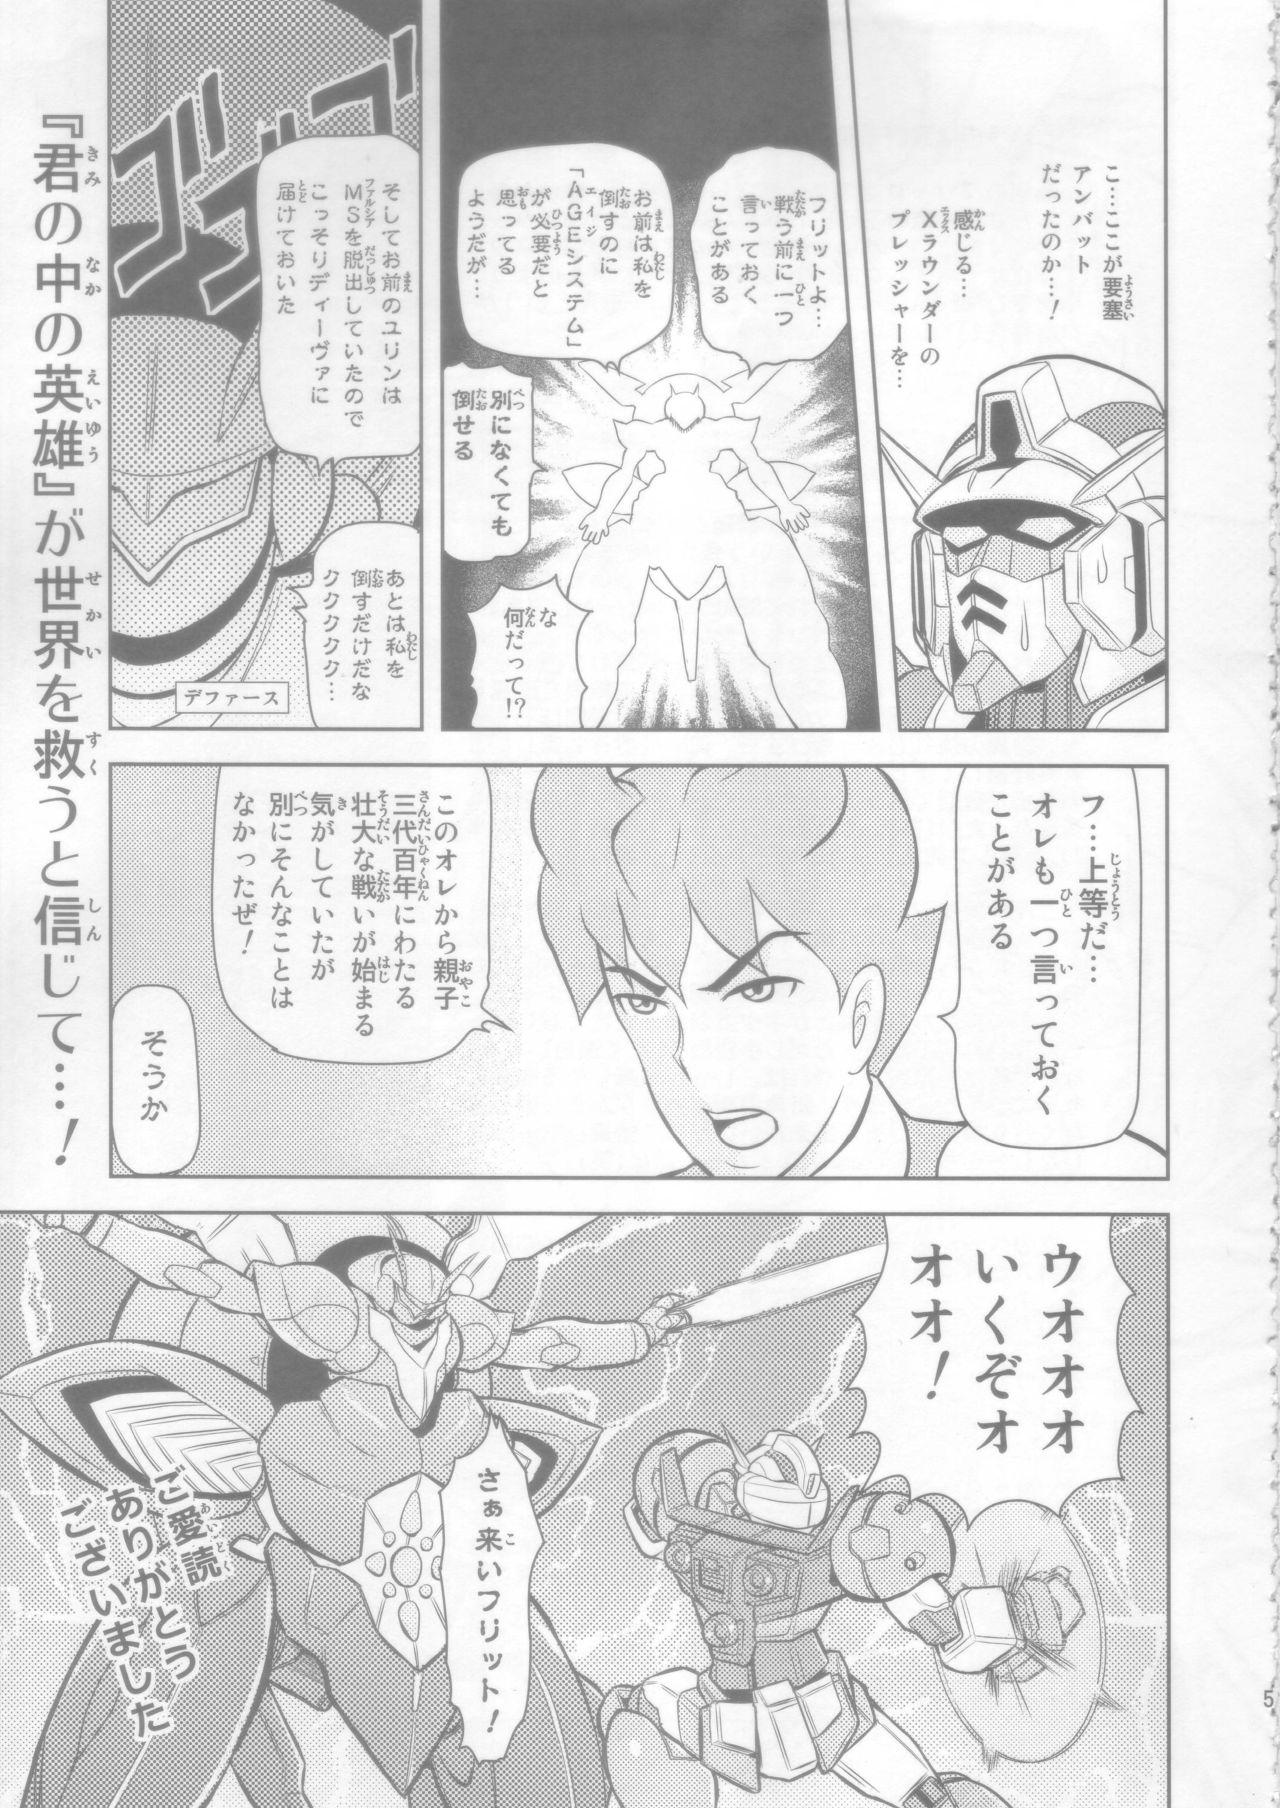 Virgin AGE MASTER FLIT VIRGIN FLIGHT:04 - Gundam age Travesti - Page 5